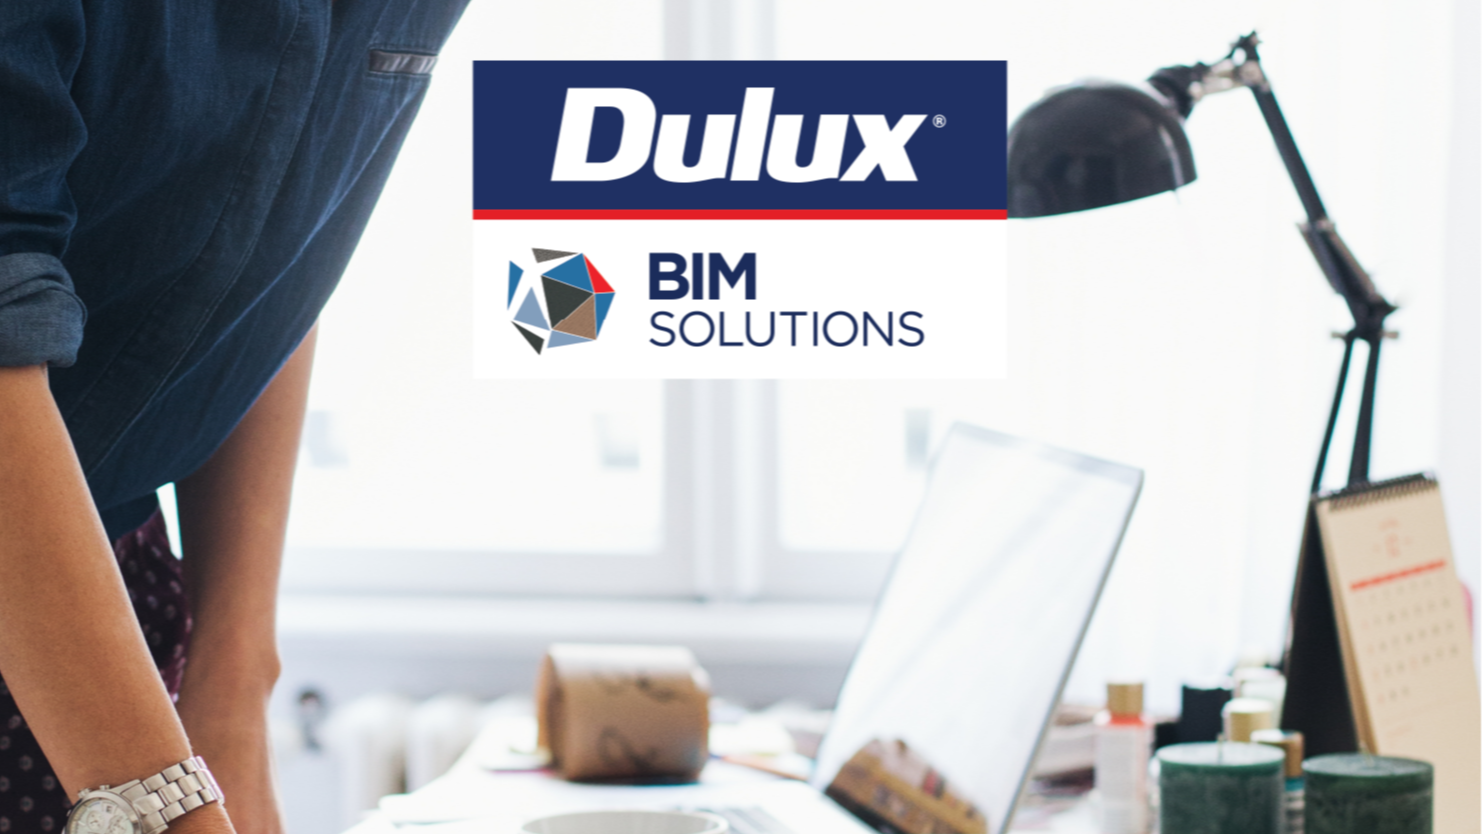 dulux BIM solution logo, desk top background.